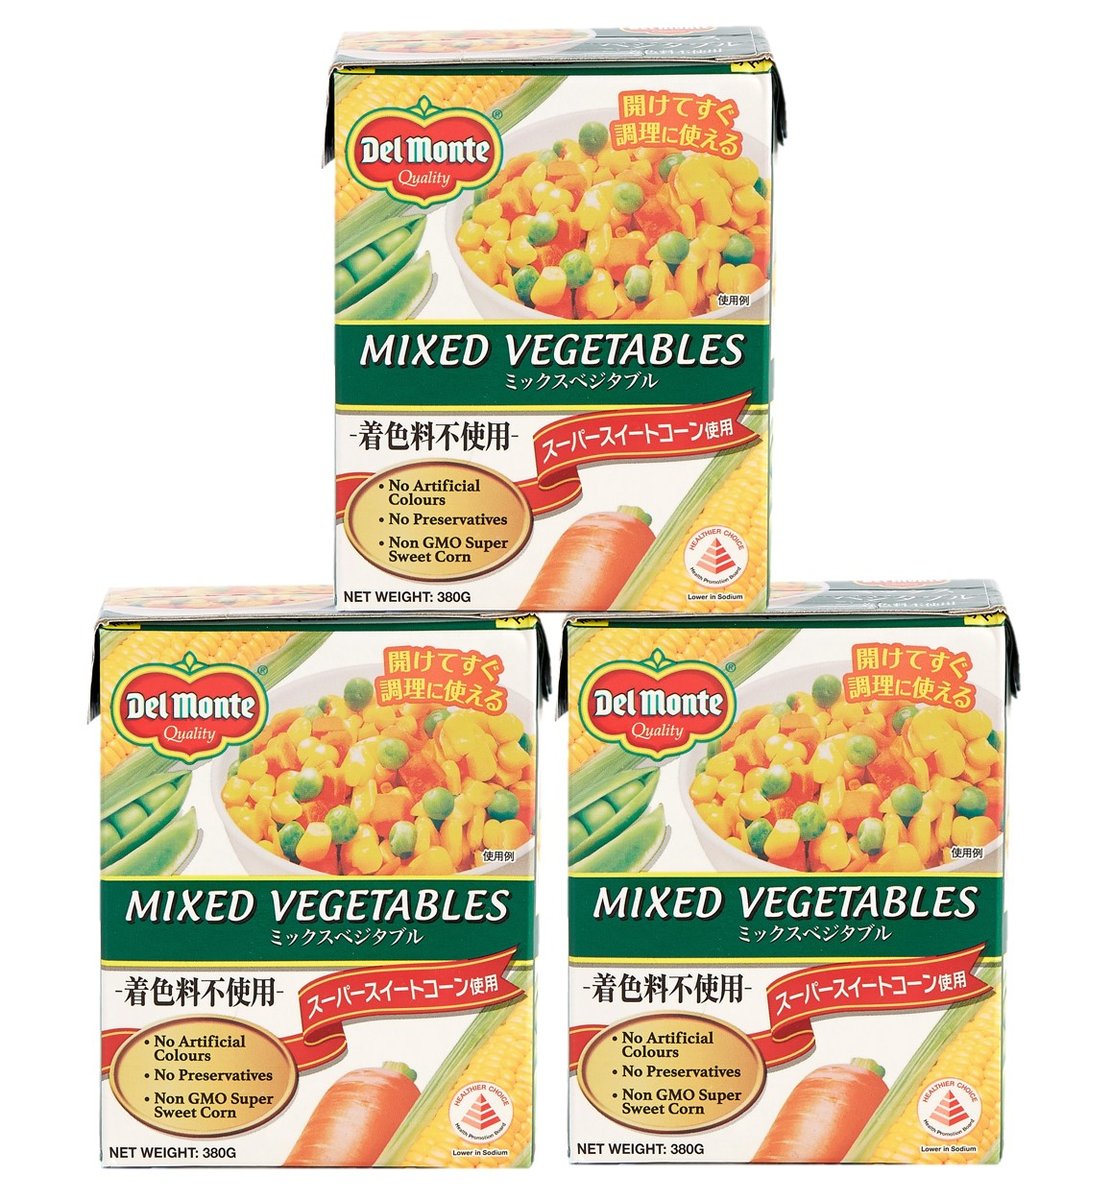 Tetra Pack Mixed Vegetables x 3